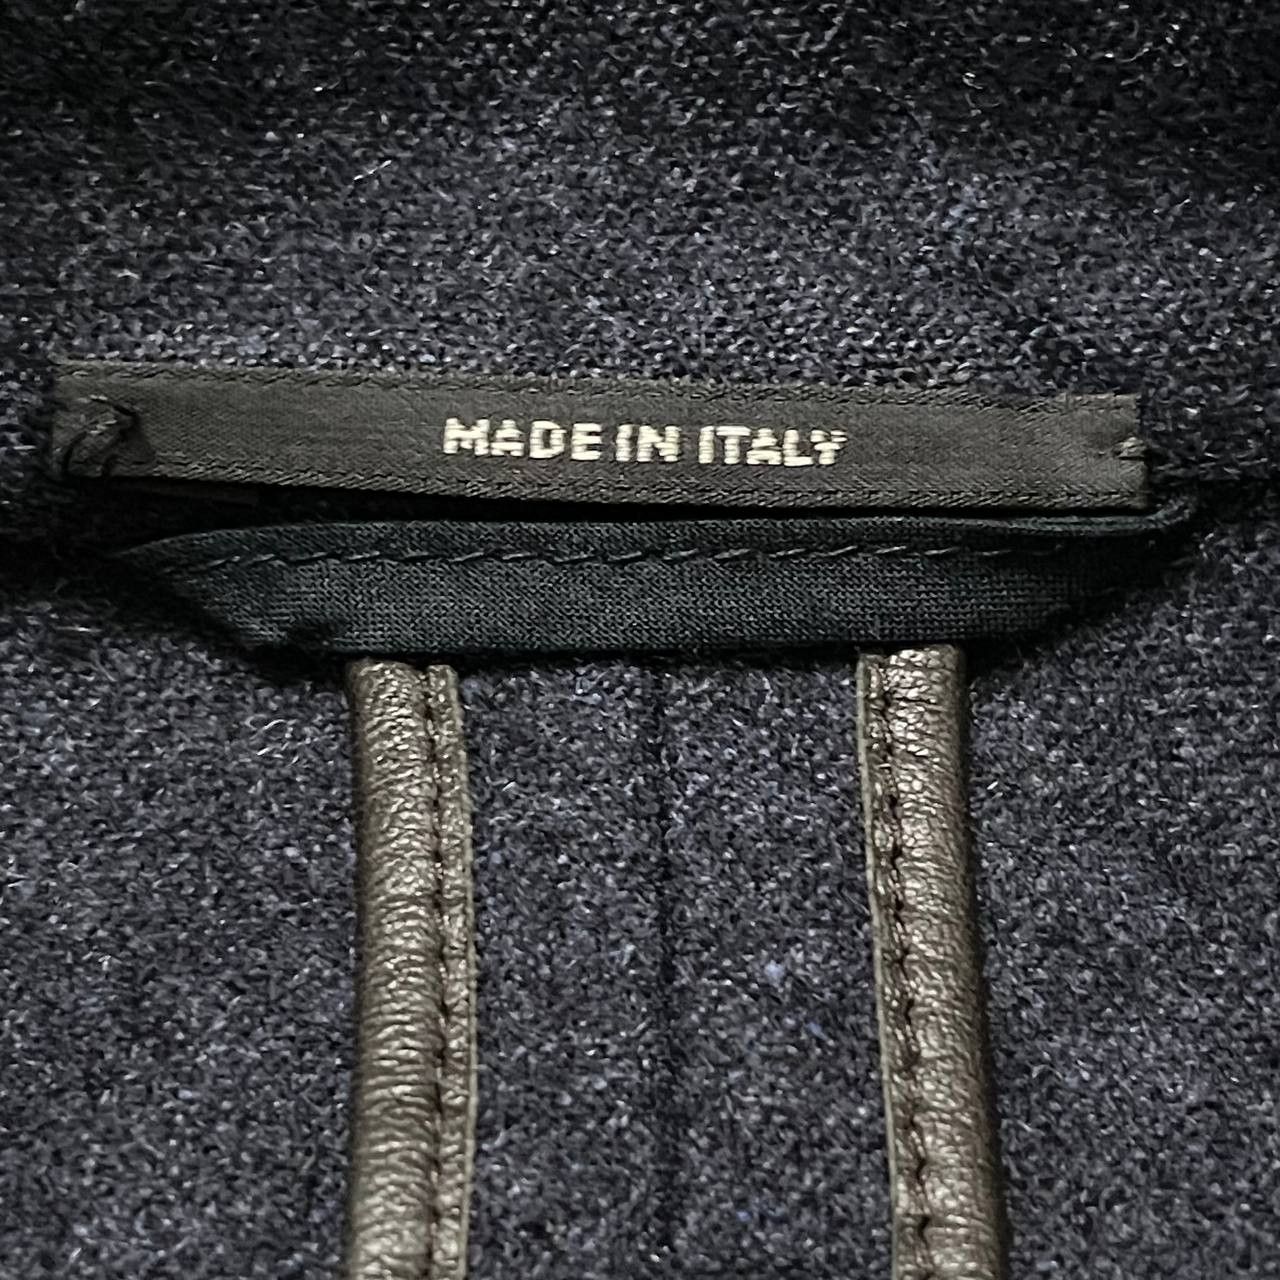 Vintage Hermes Made in Italy Jacket 100% Cahsmere - 10